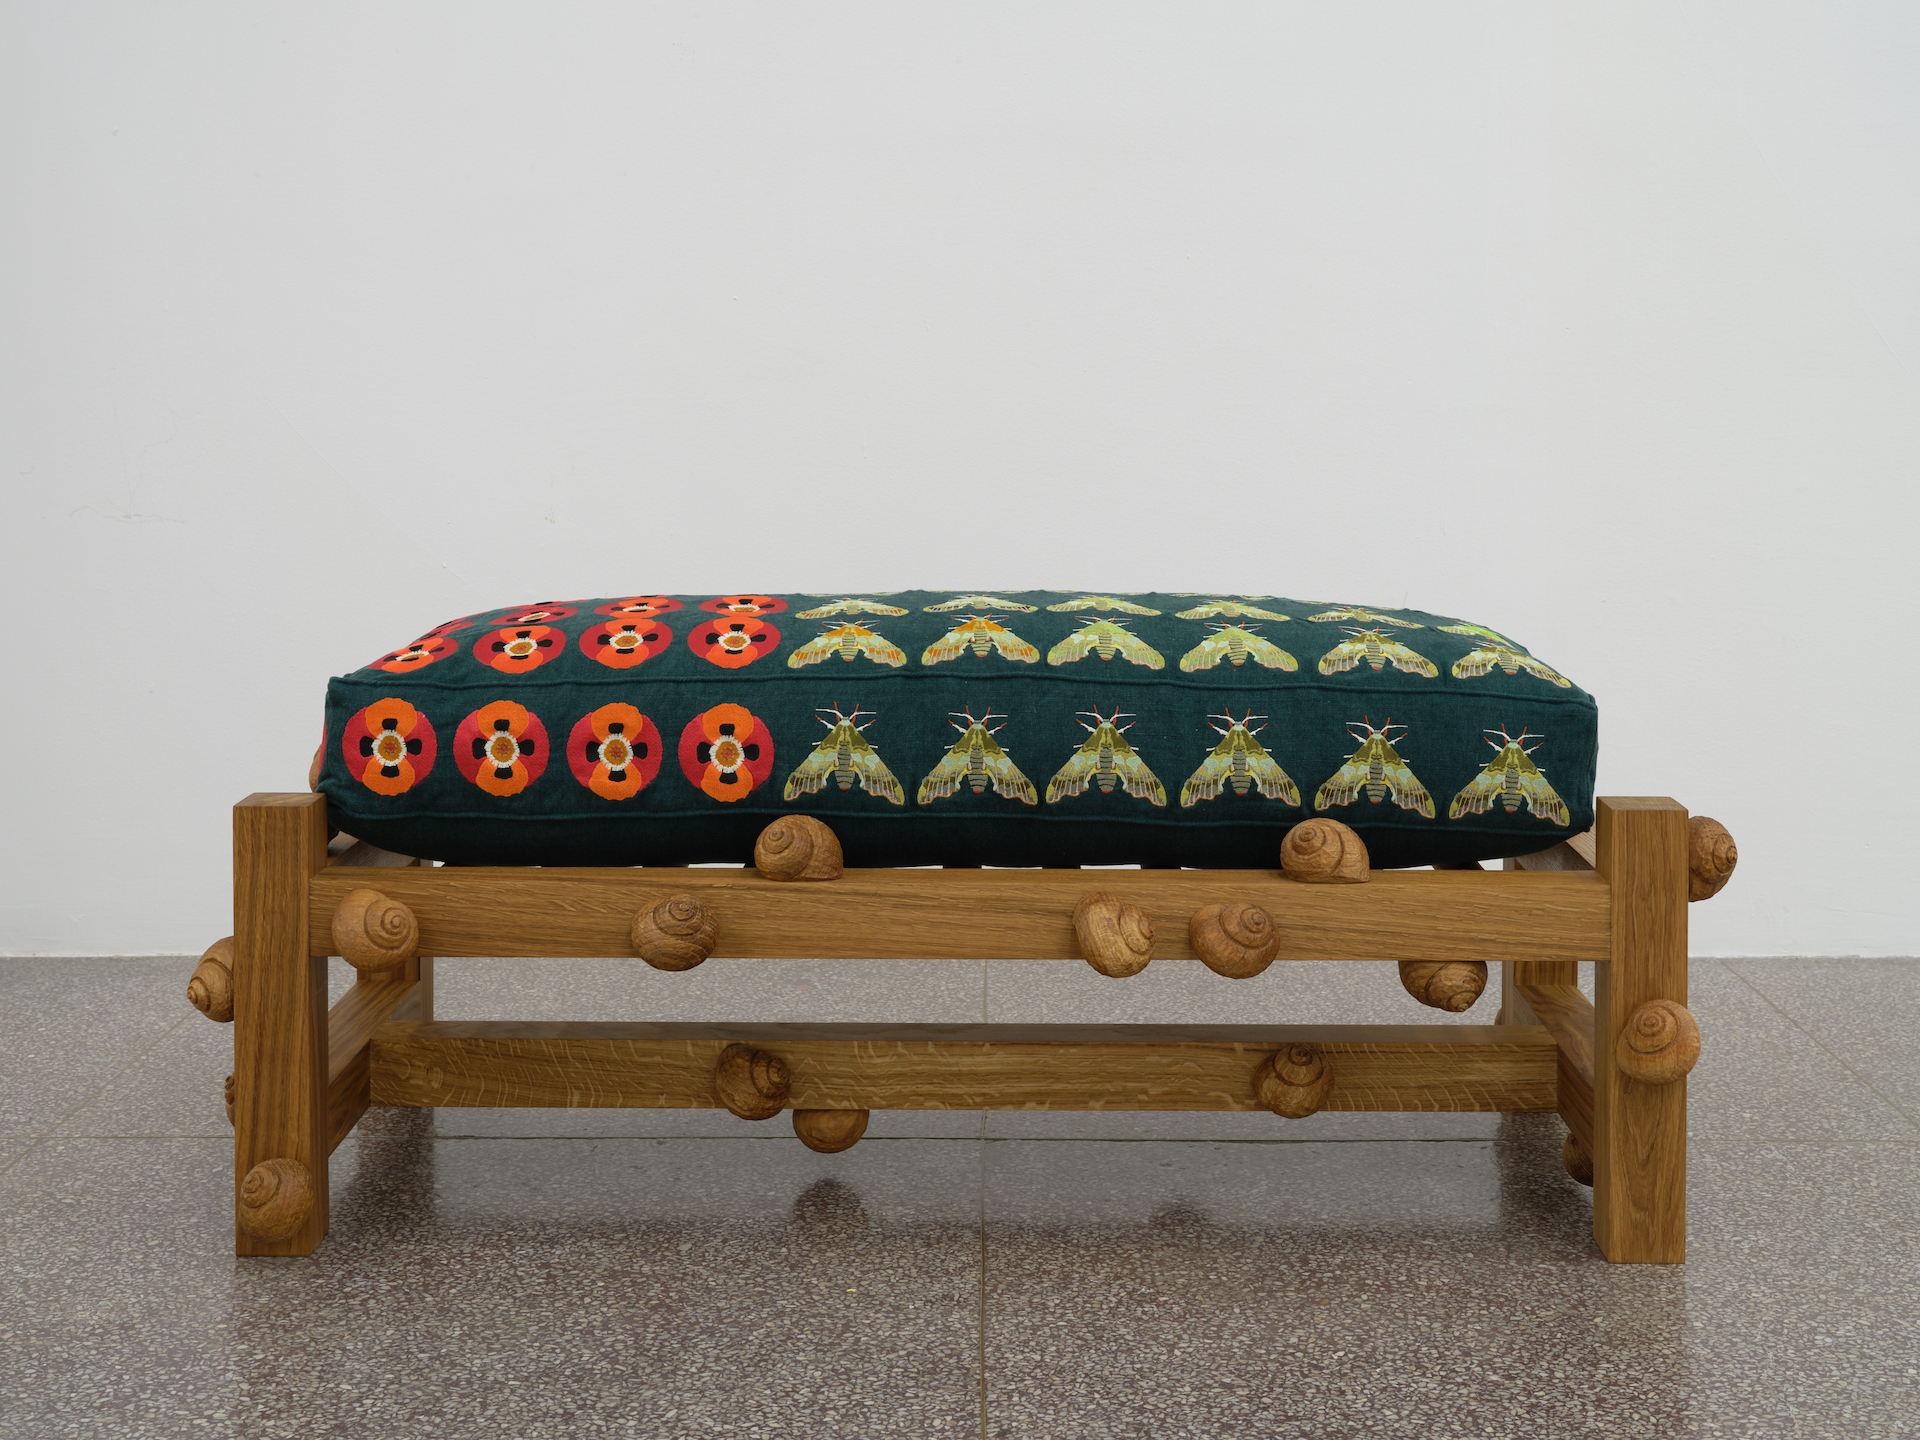 Daniel Dewar & Grégory Gicquel, Oak bench with lime hawk moths, opium poppies and snails, 2022